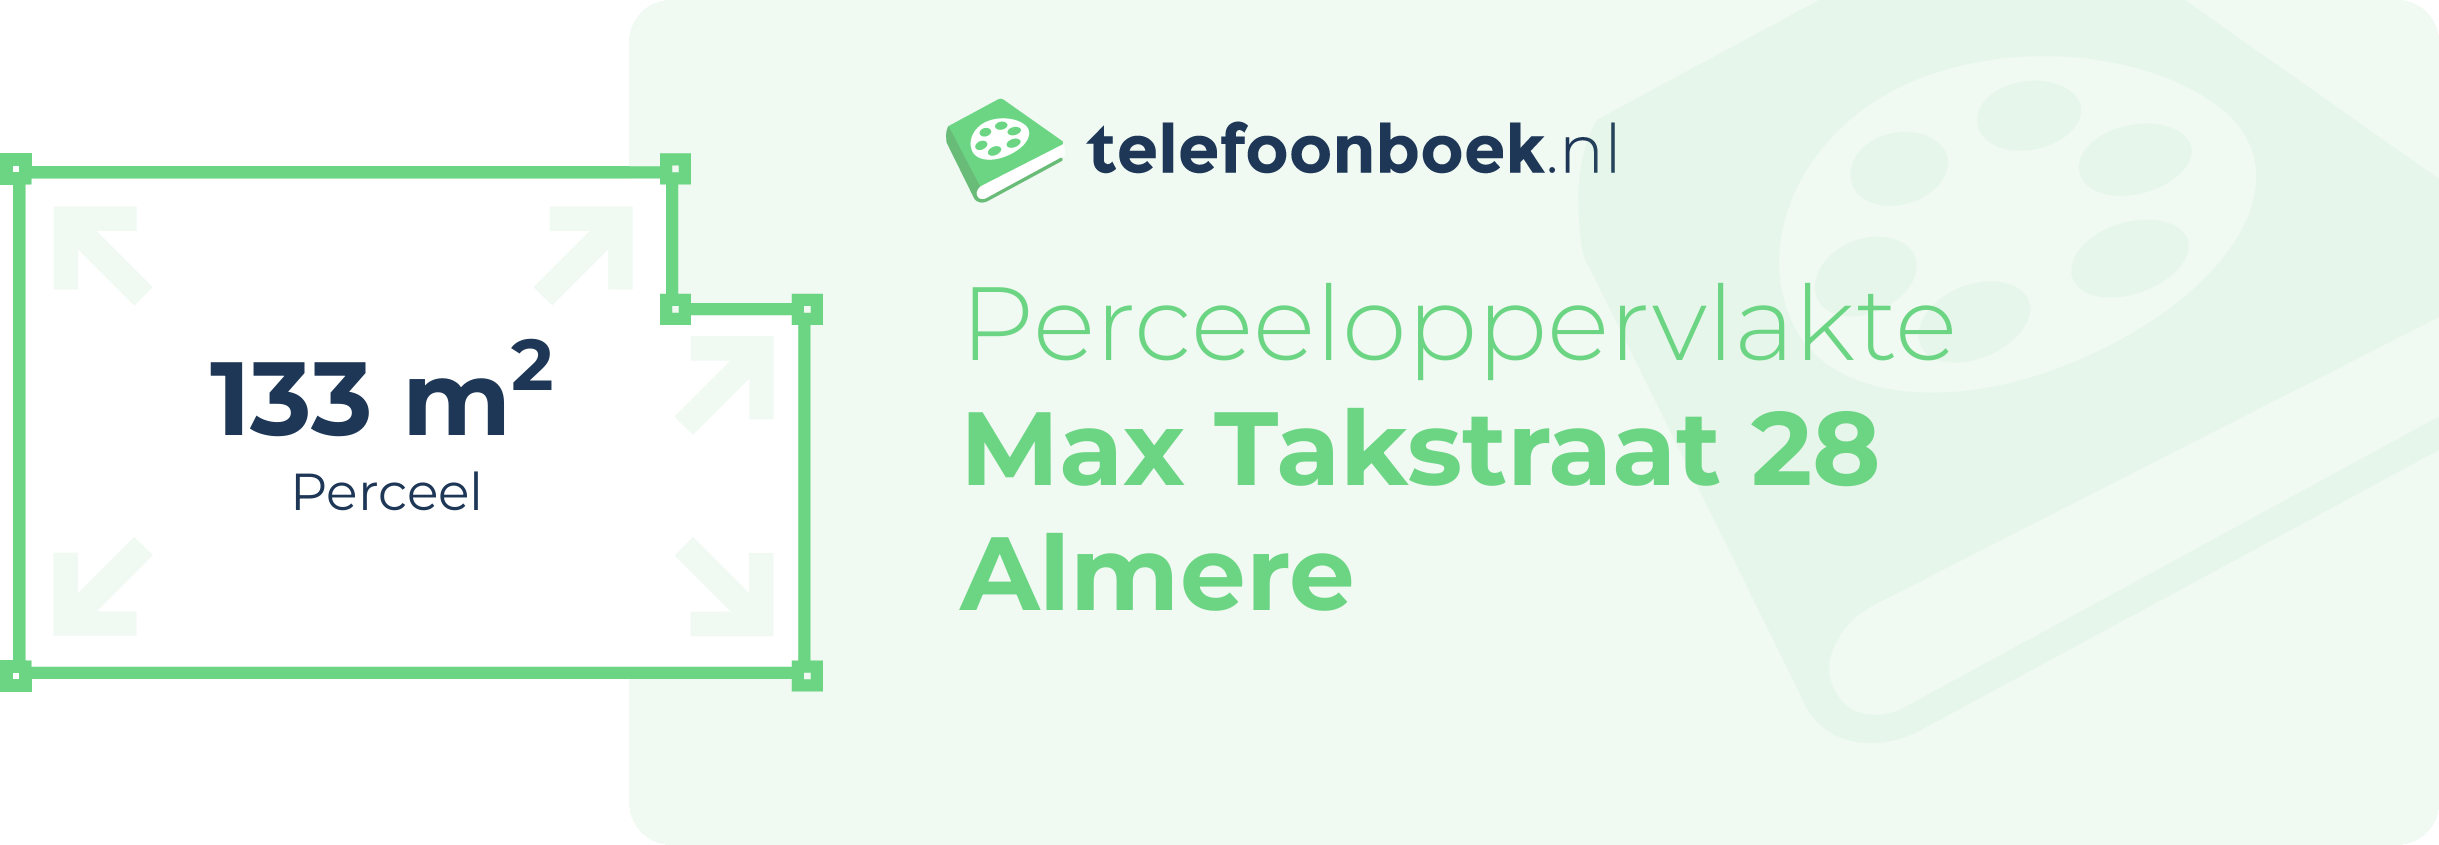 Perceeloppervlakte Max Takstraat 28 Almere